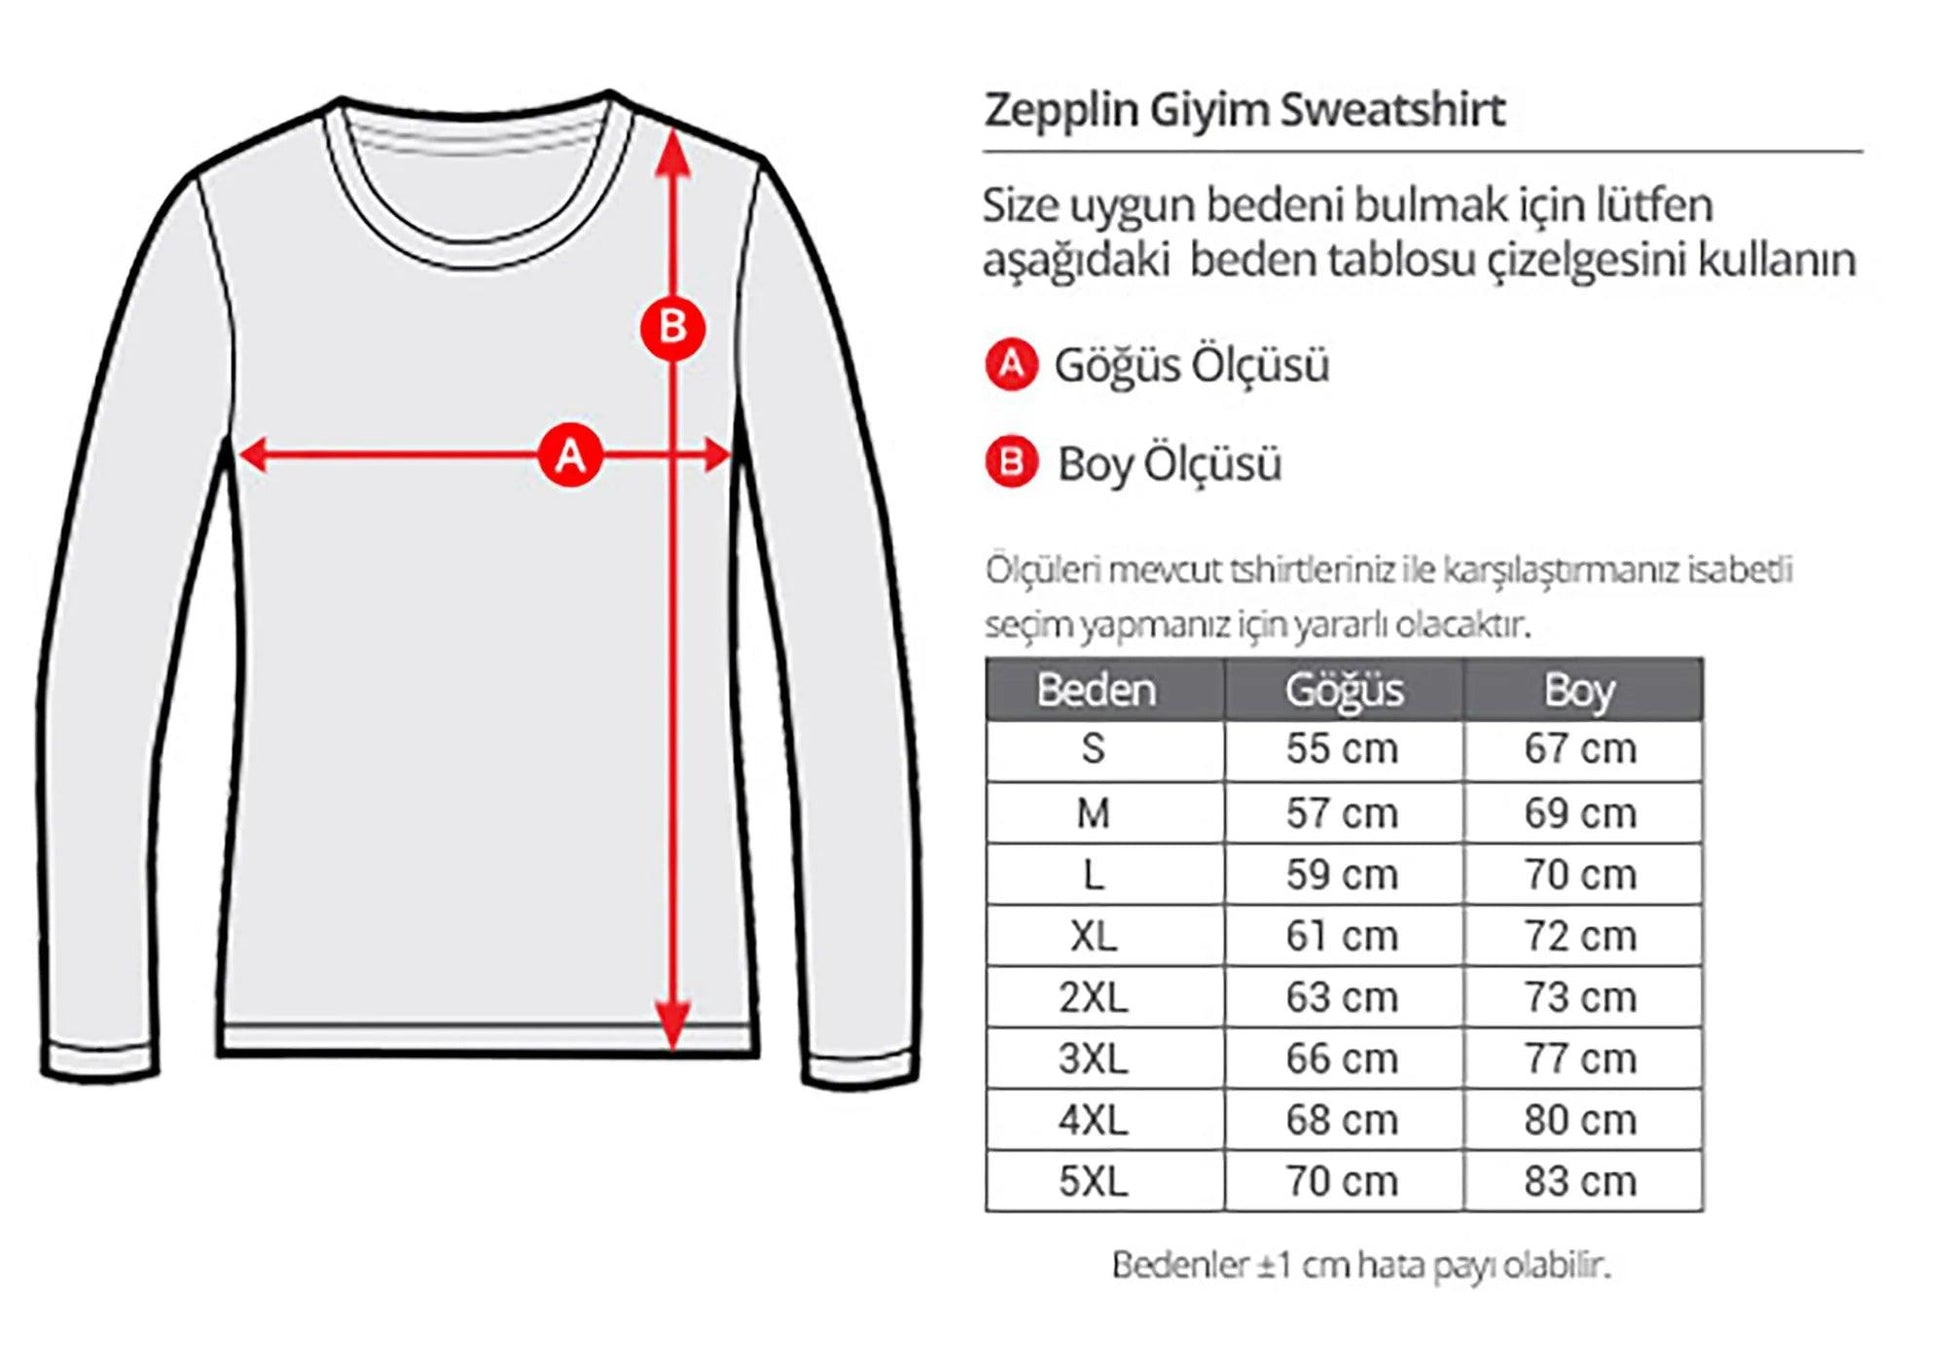 Canavar Kamyon SUV Reglan Kol Beyaz Sweatshirt - Zepplingiyim